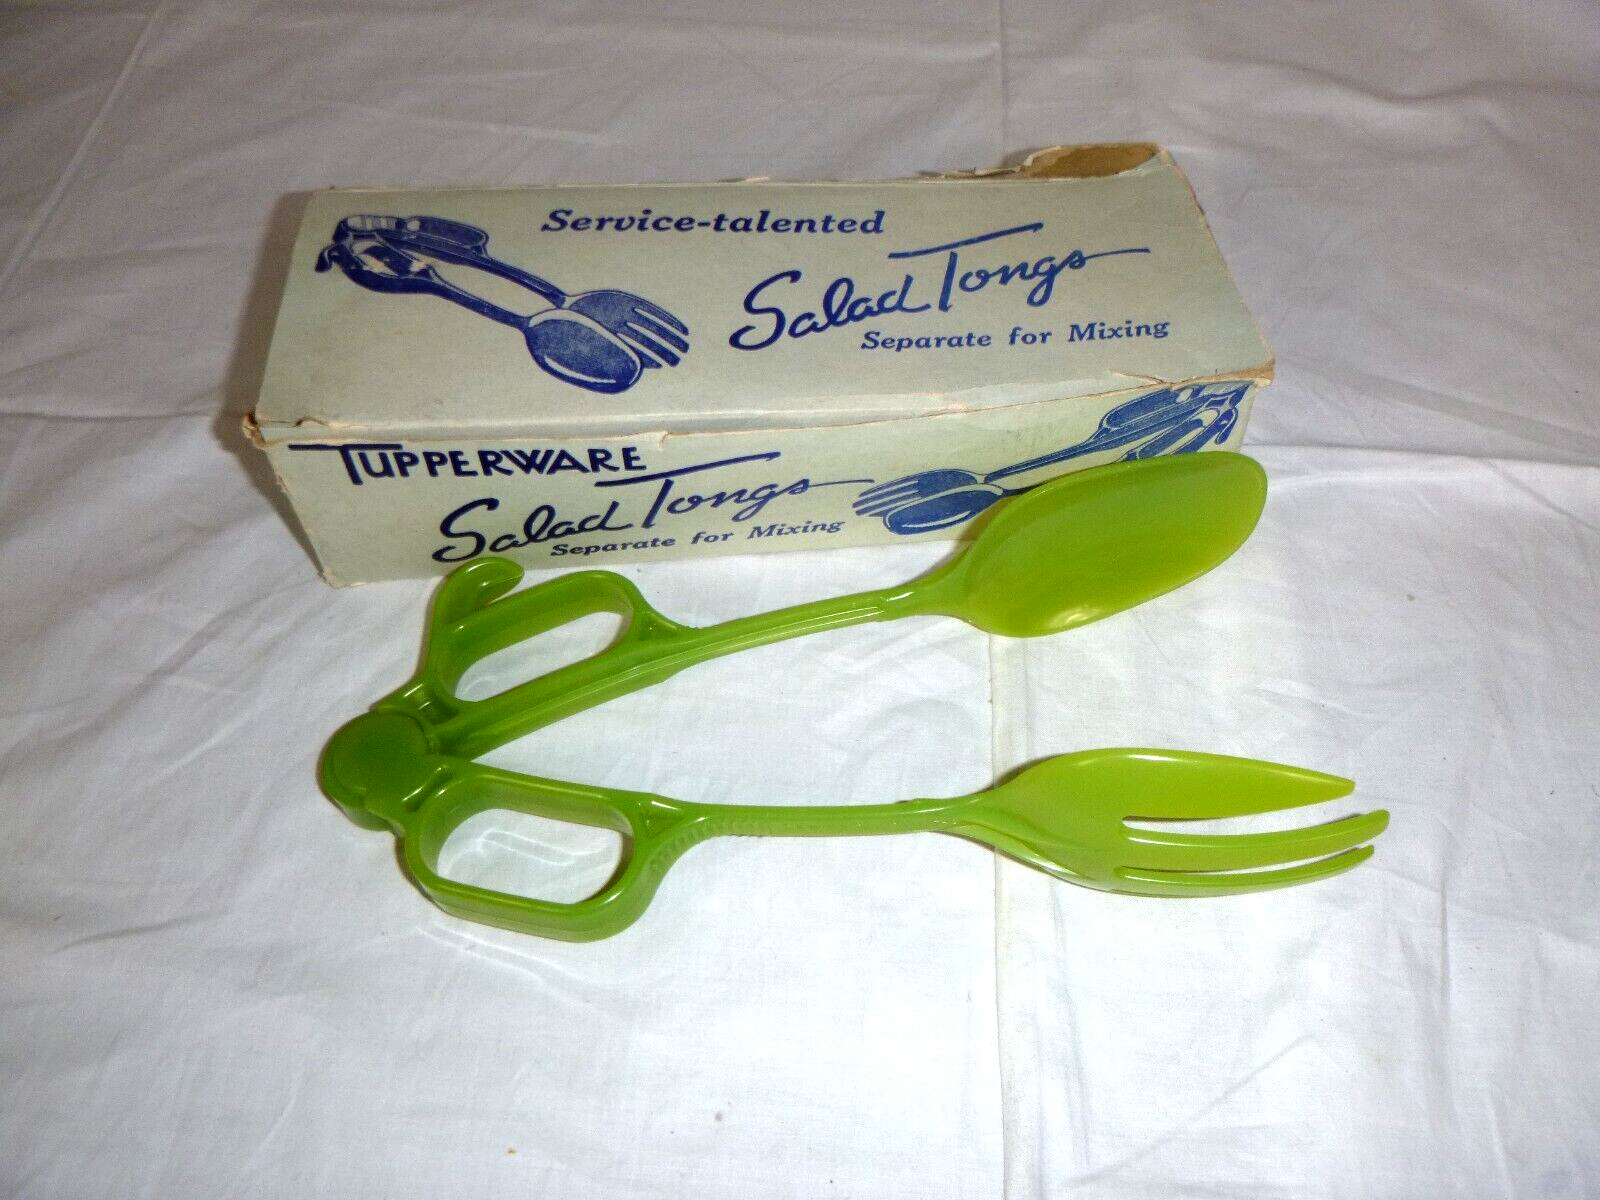 Vtg 1954 Original Tupperware Salad Tongs Service-Talented w/box USA Green